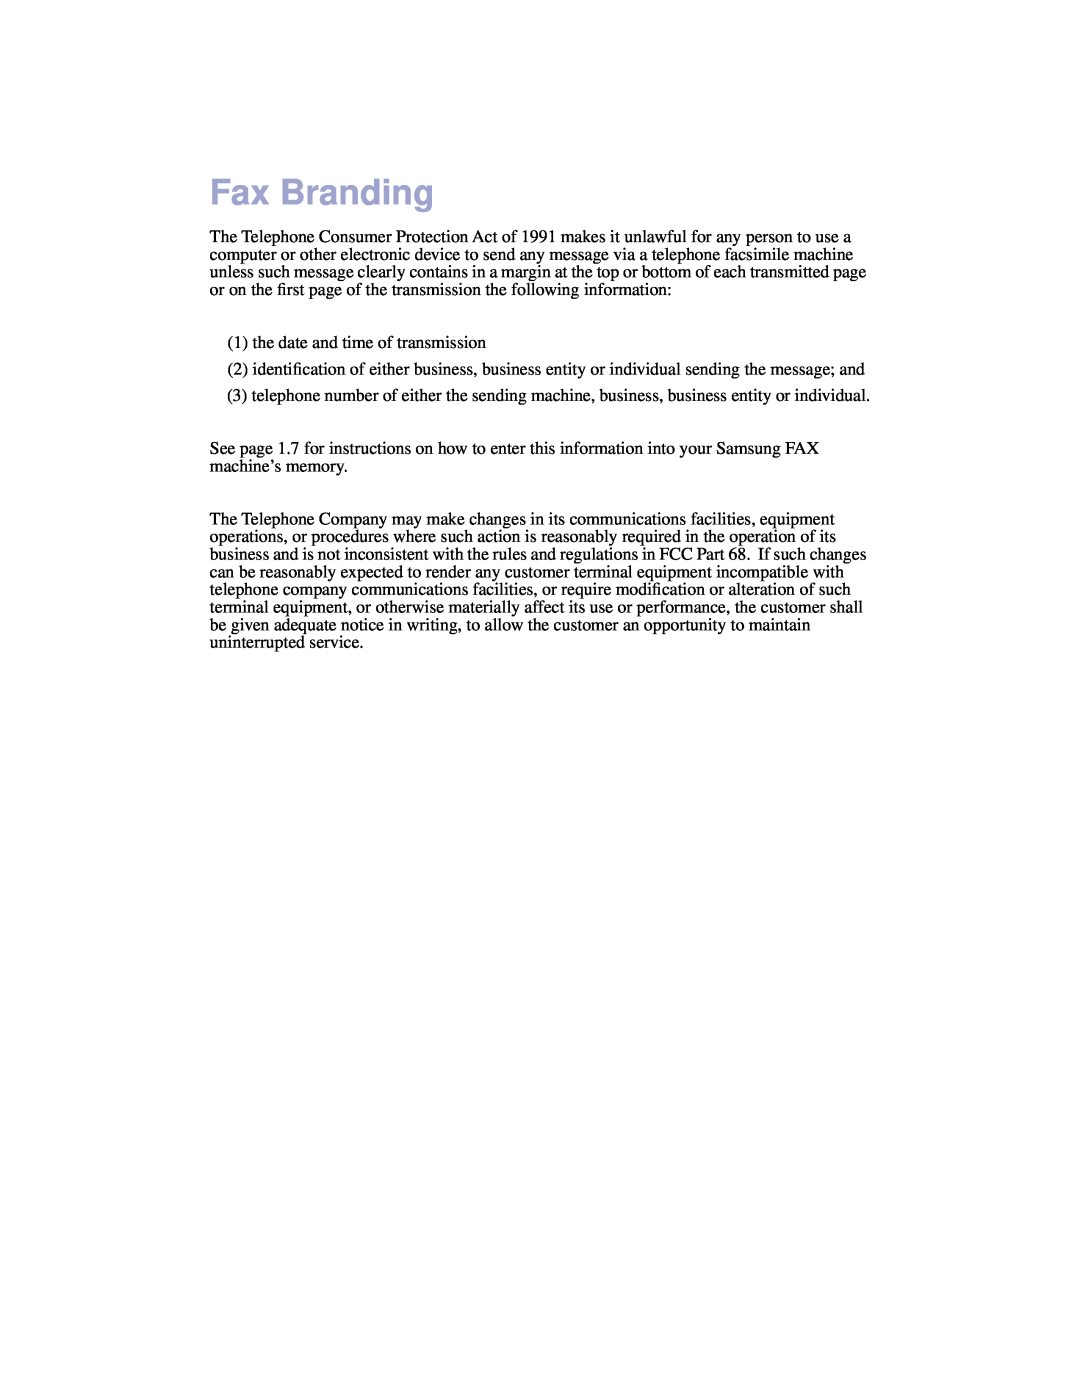 Samsung SF-3100 manual Fax Branding 